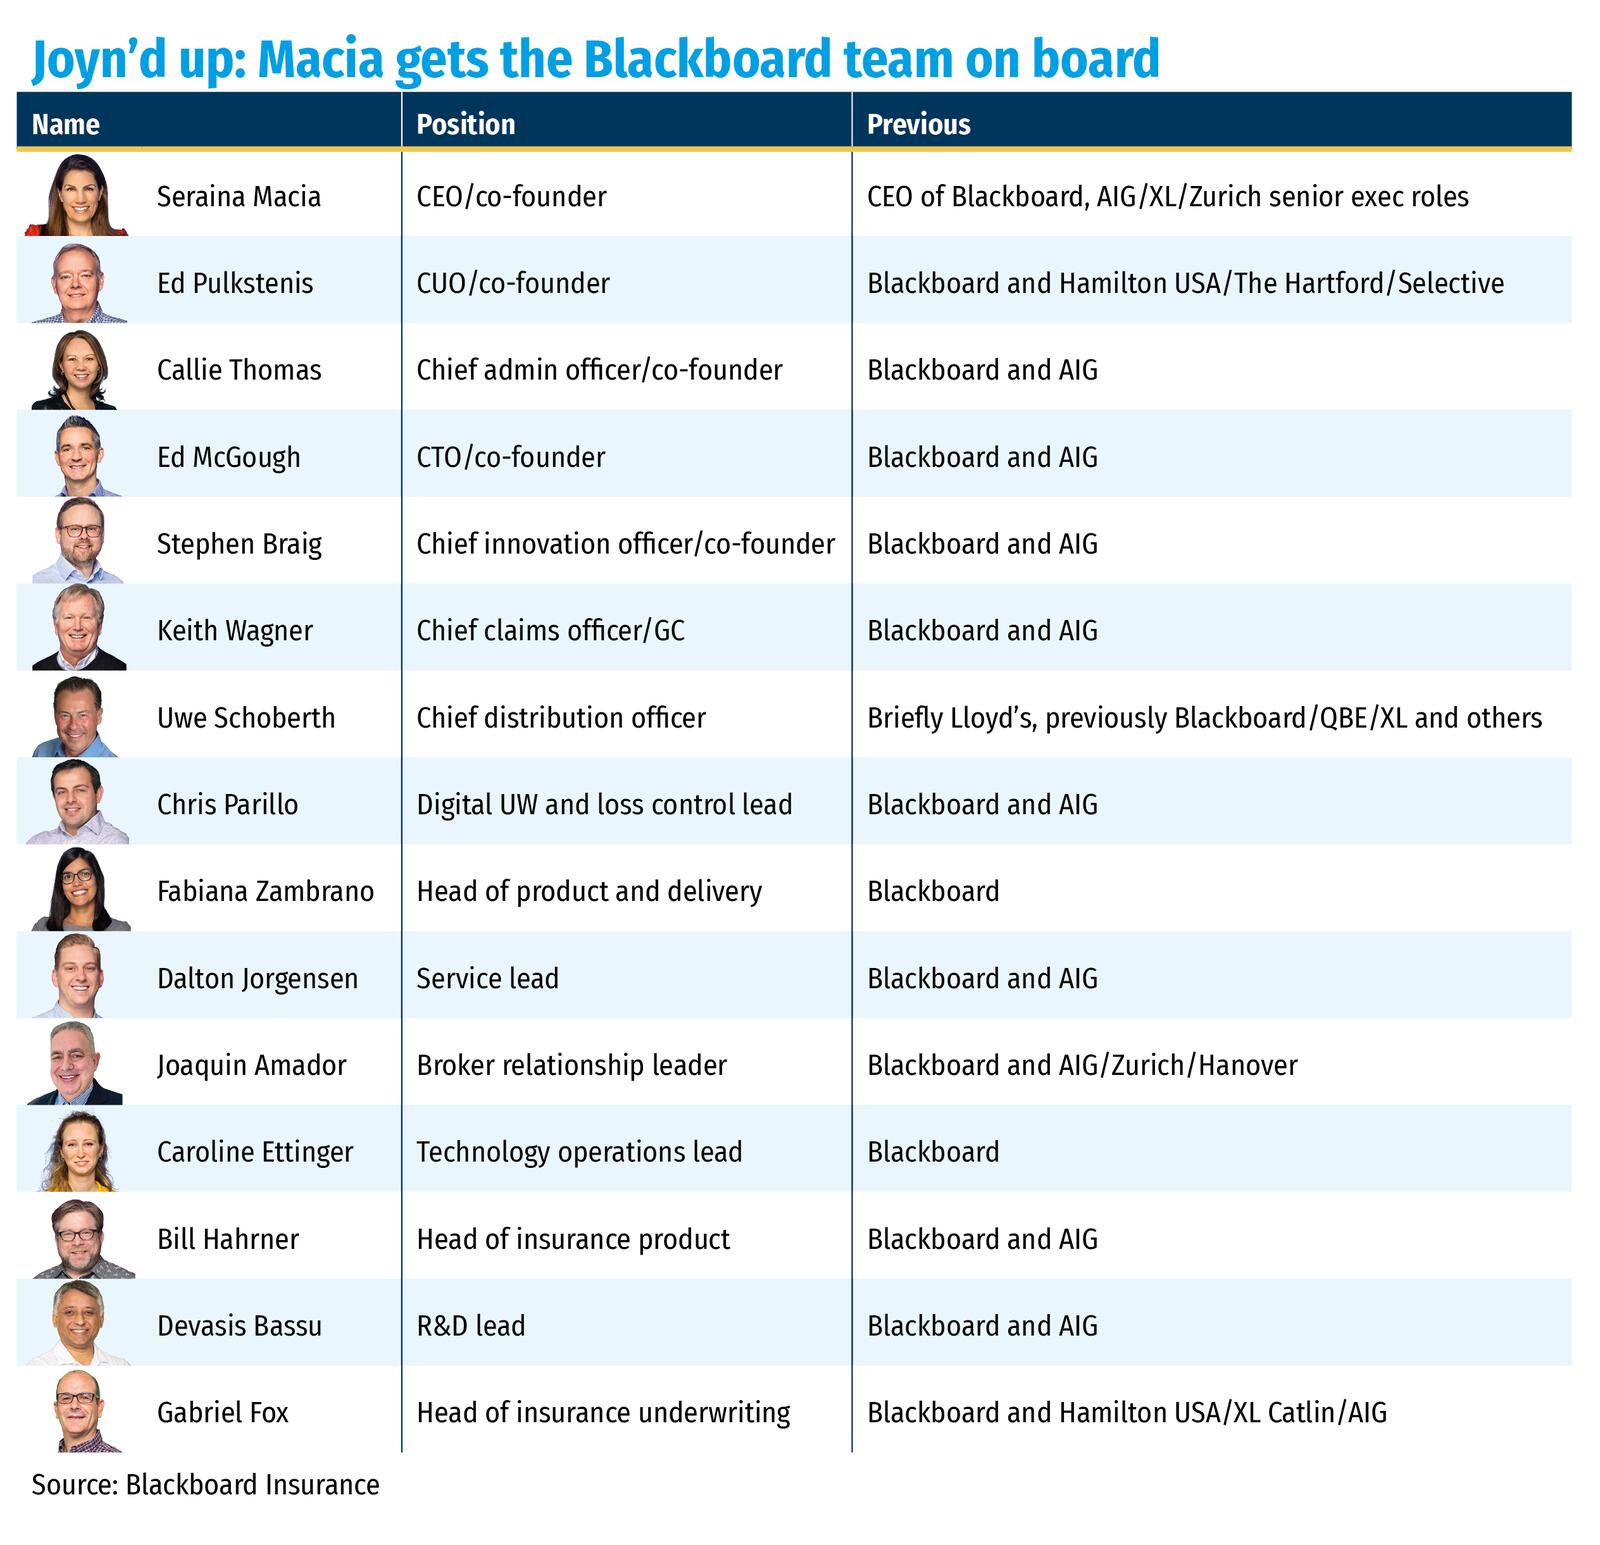 Joyn’d up- Macia gets the Blackboard team on board